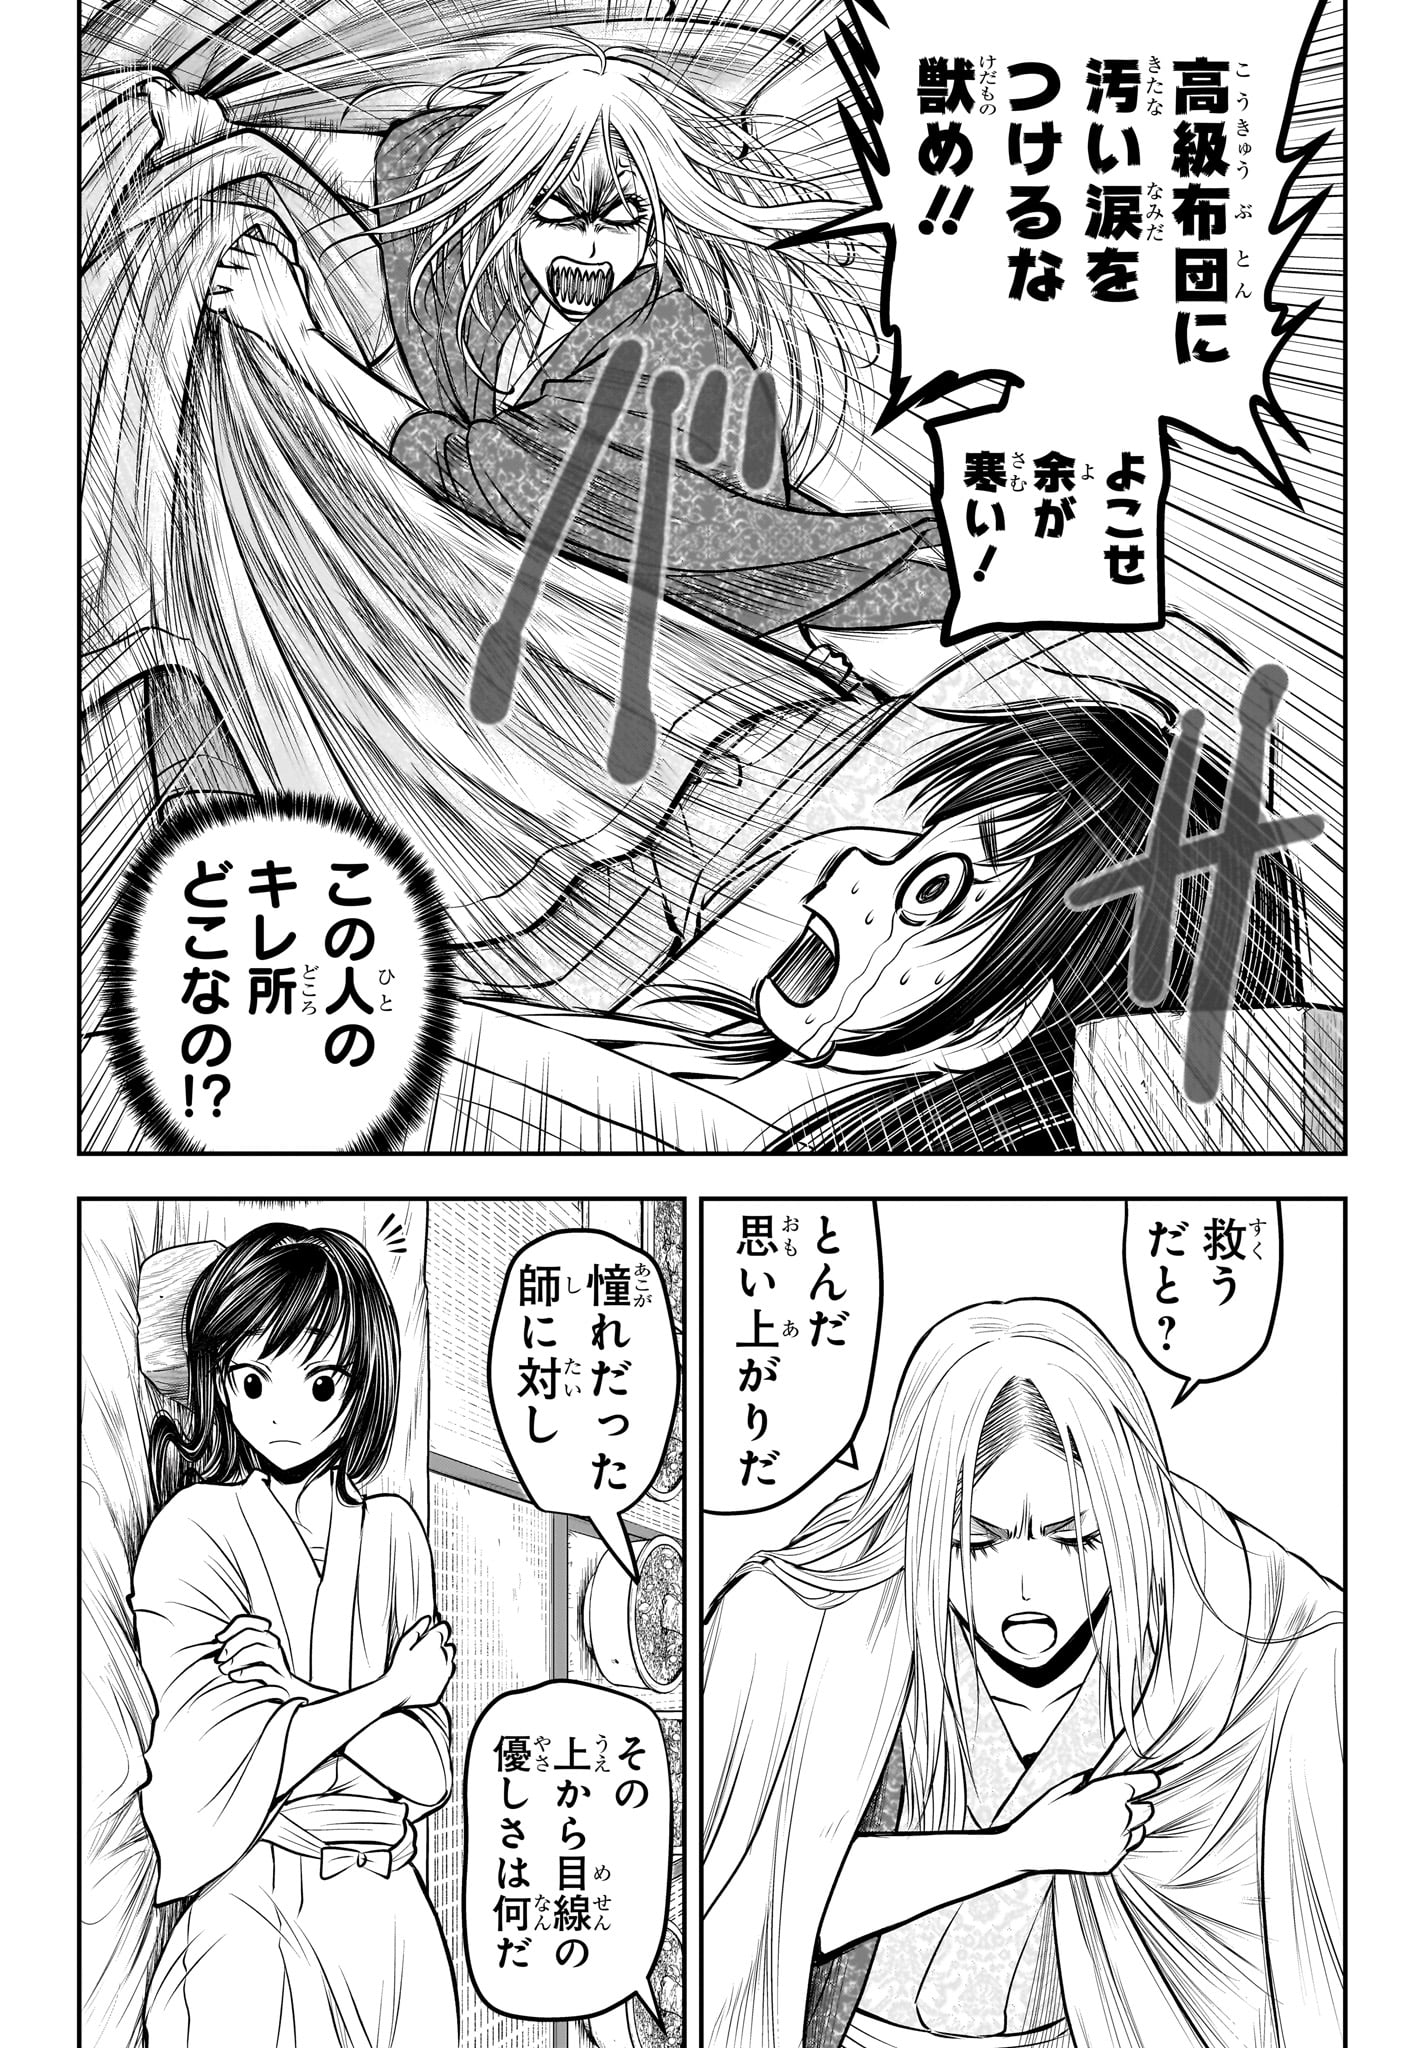 Nige Jouzu no Wakagimi - Chapter 148 - Page 10